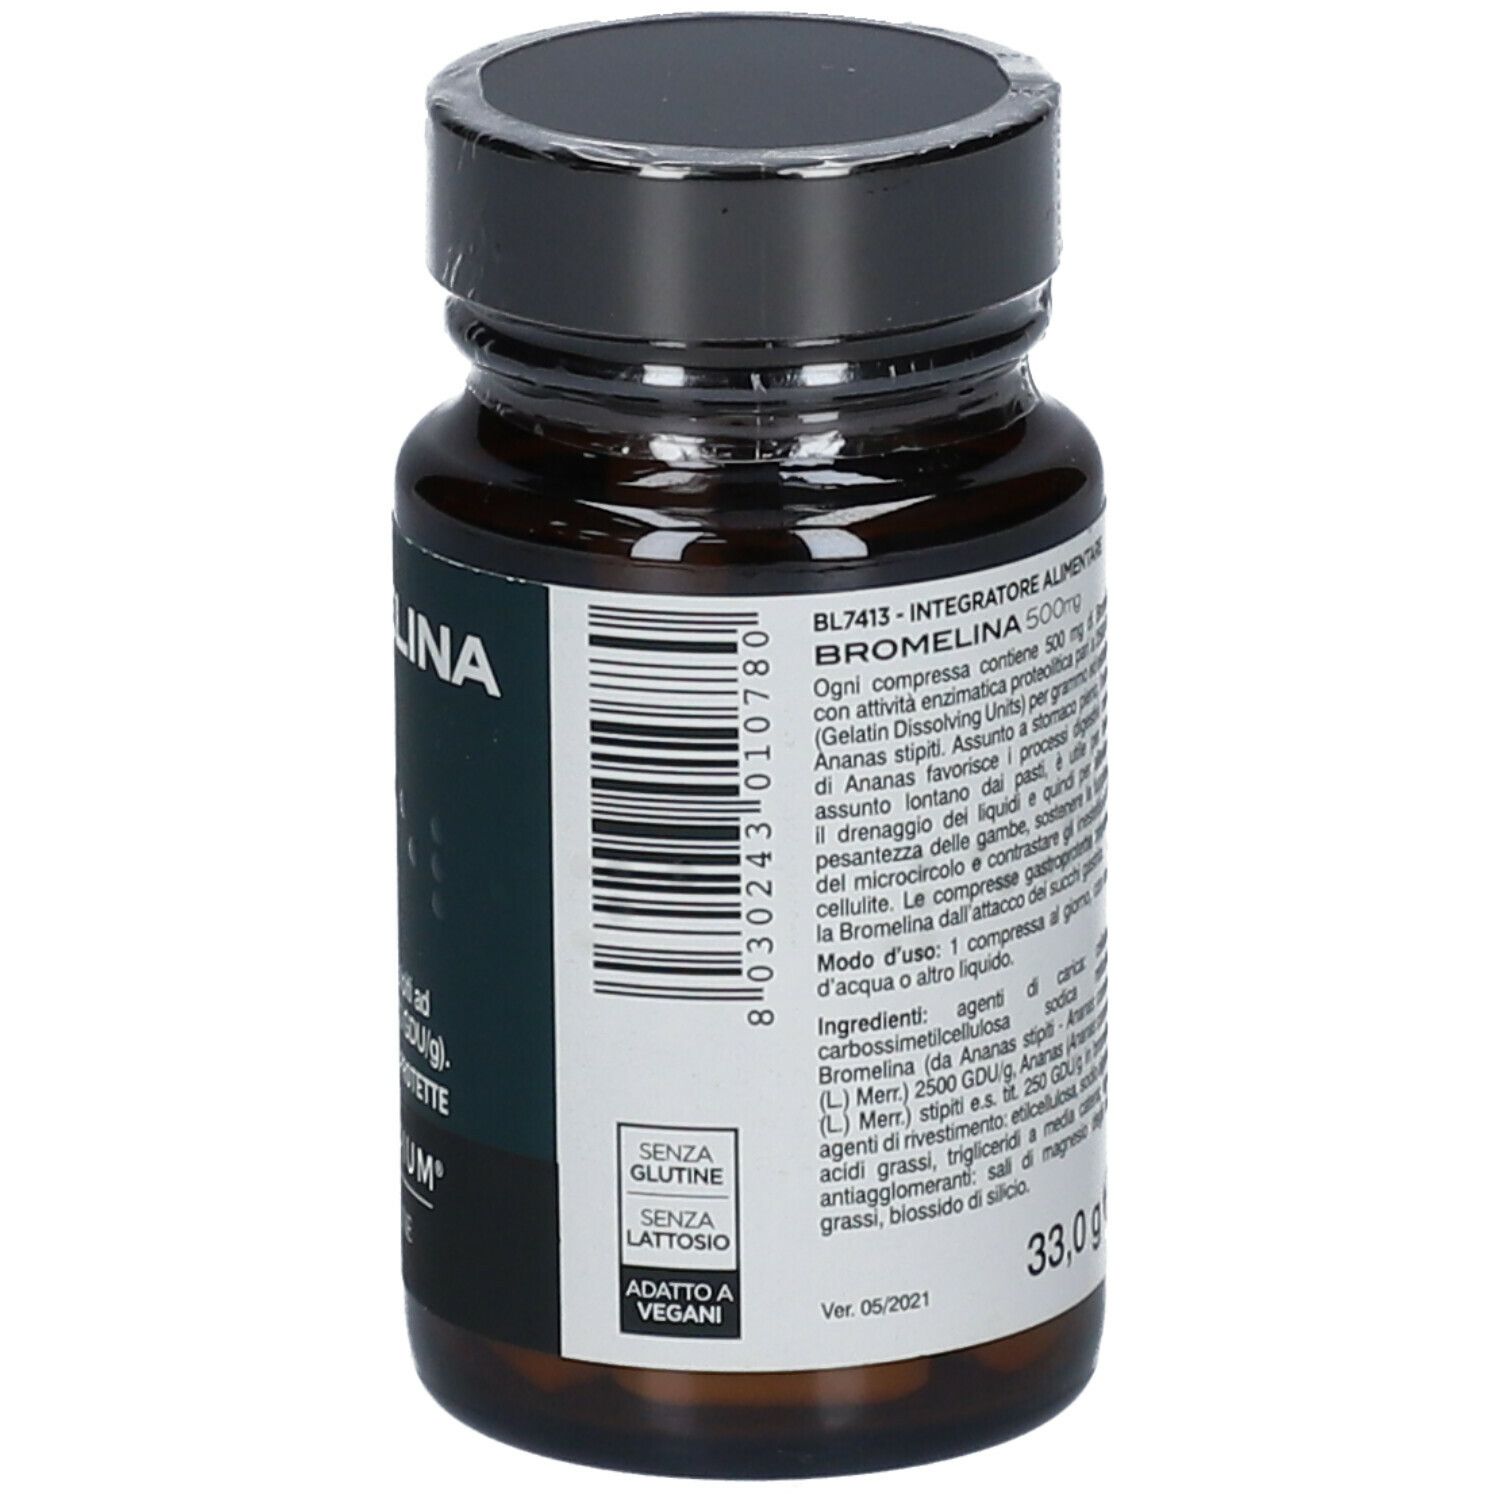 Principium Bromelina 500 mg